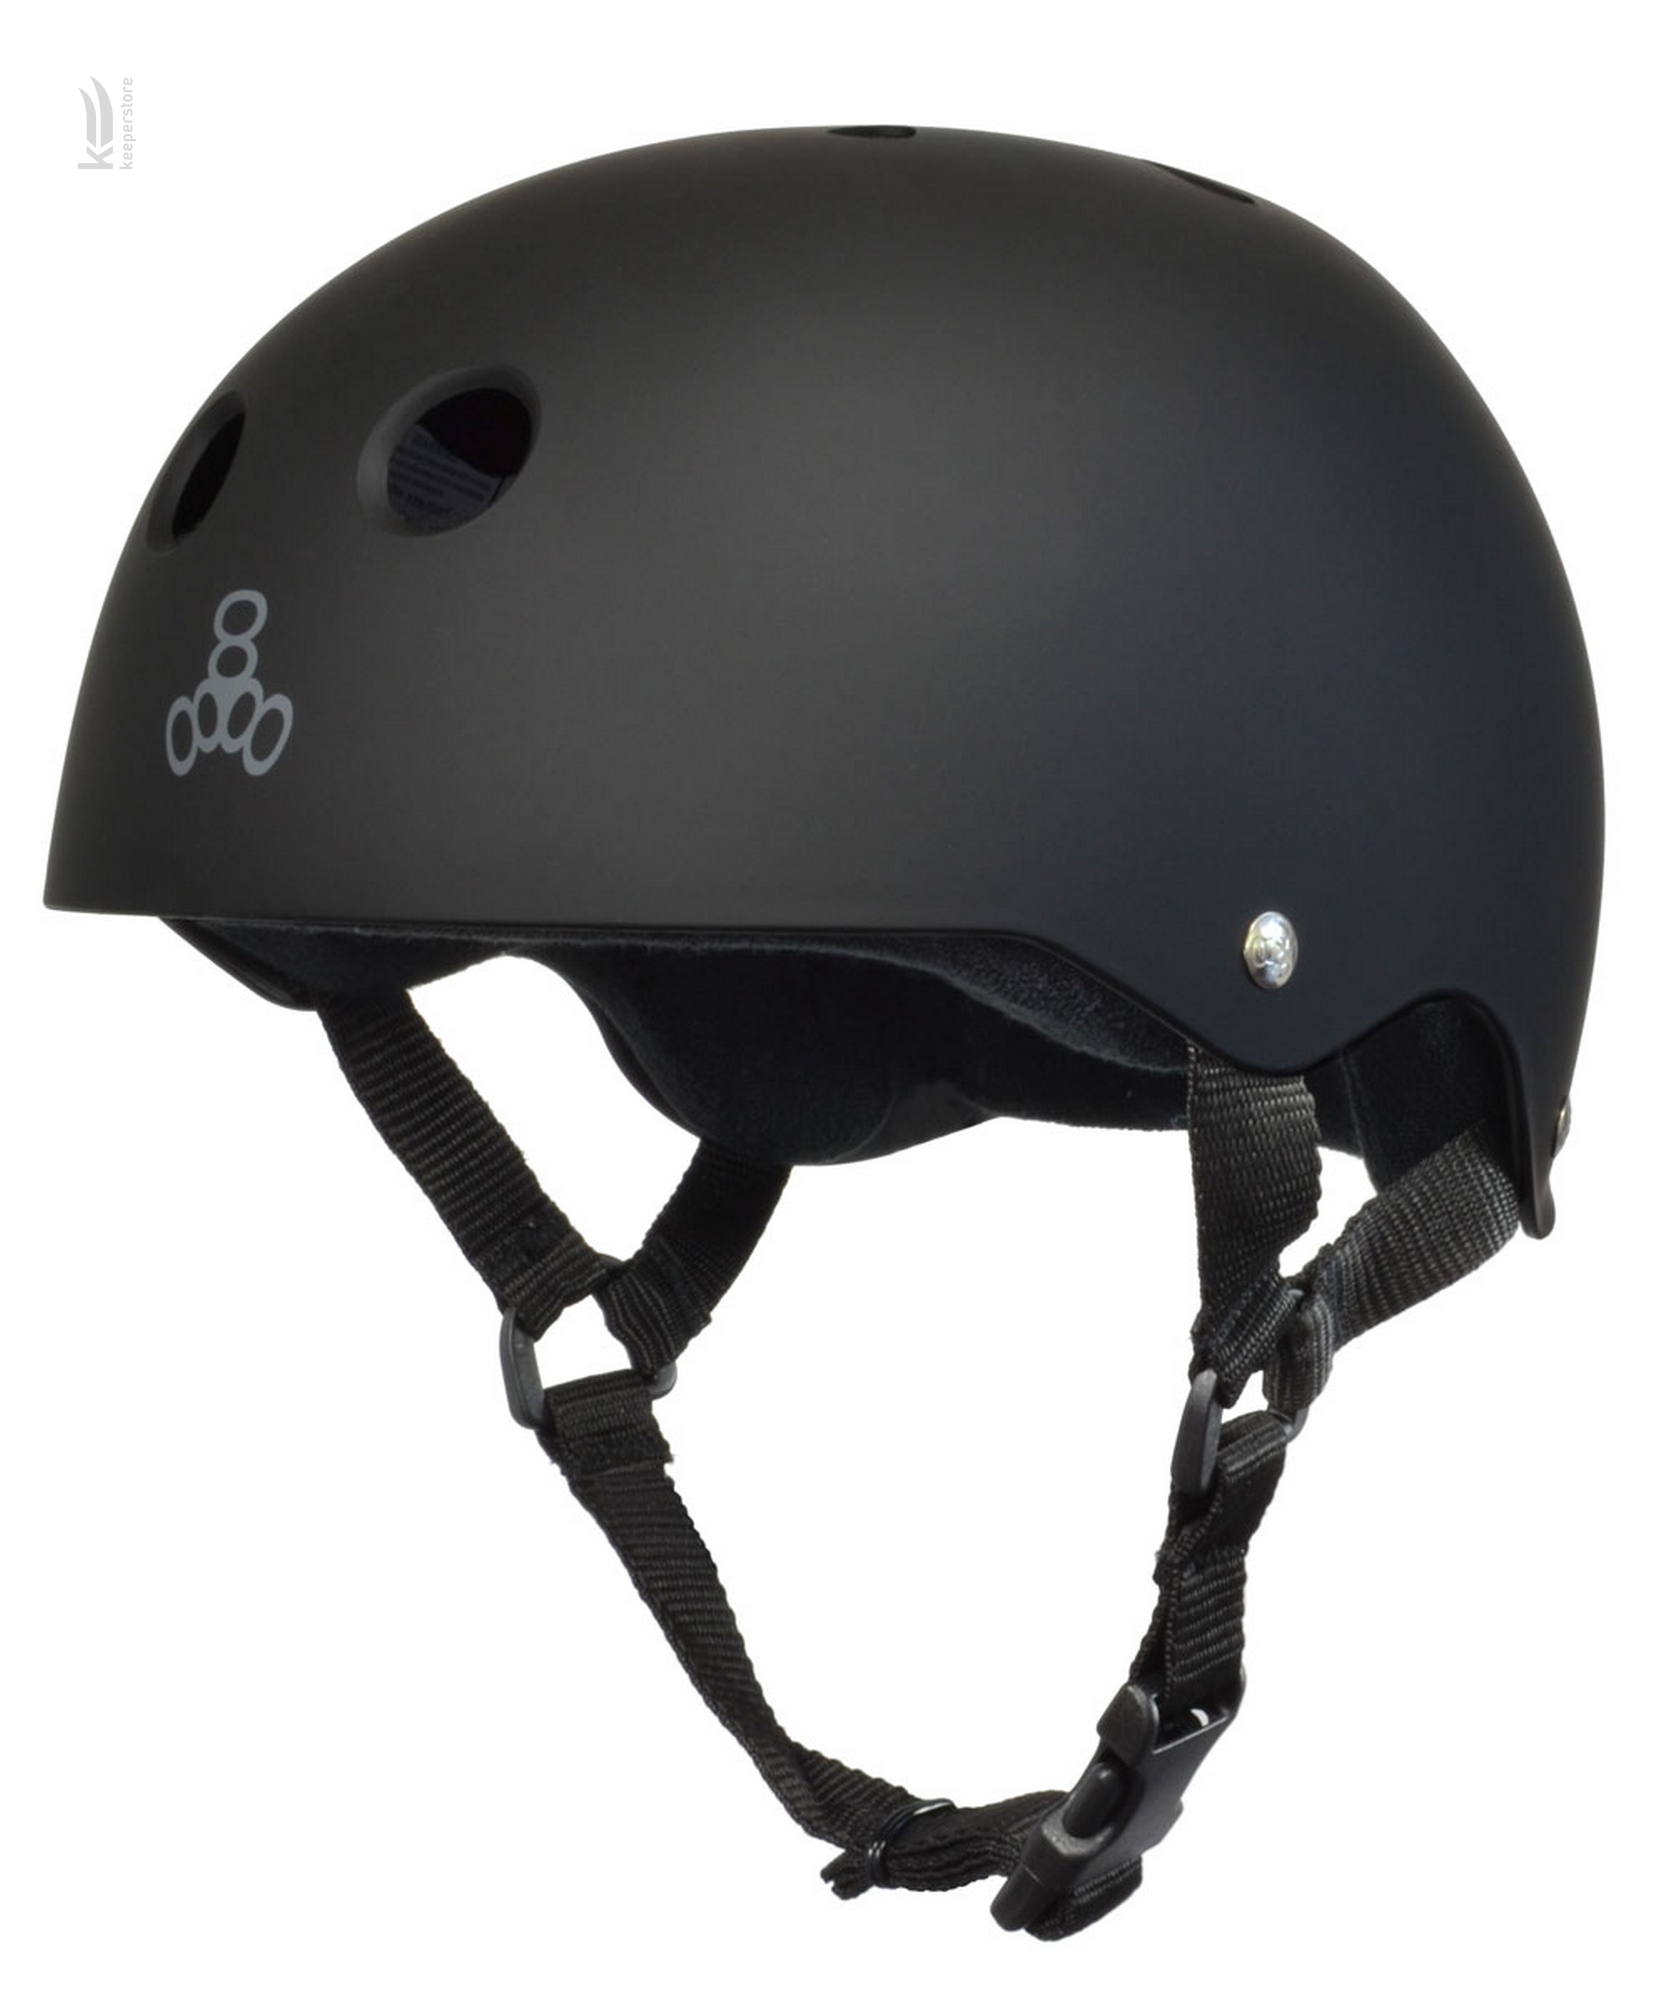 Купить шлем для скейтбординга Triple8 Sweatsaver Helmet Black All /Black (M) в Киеве